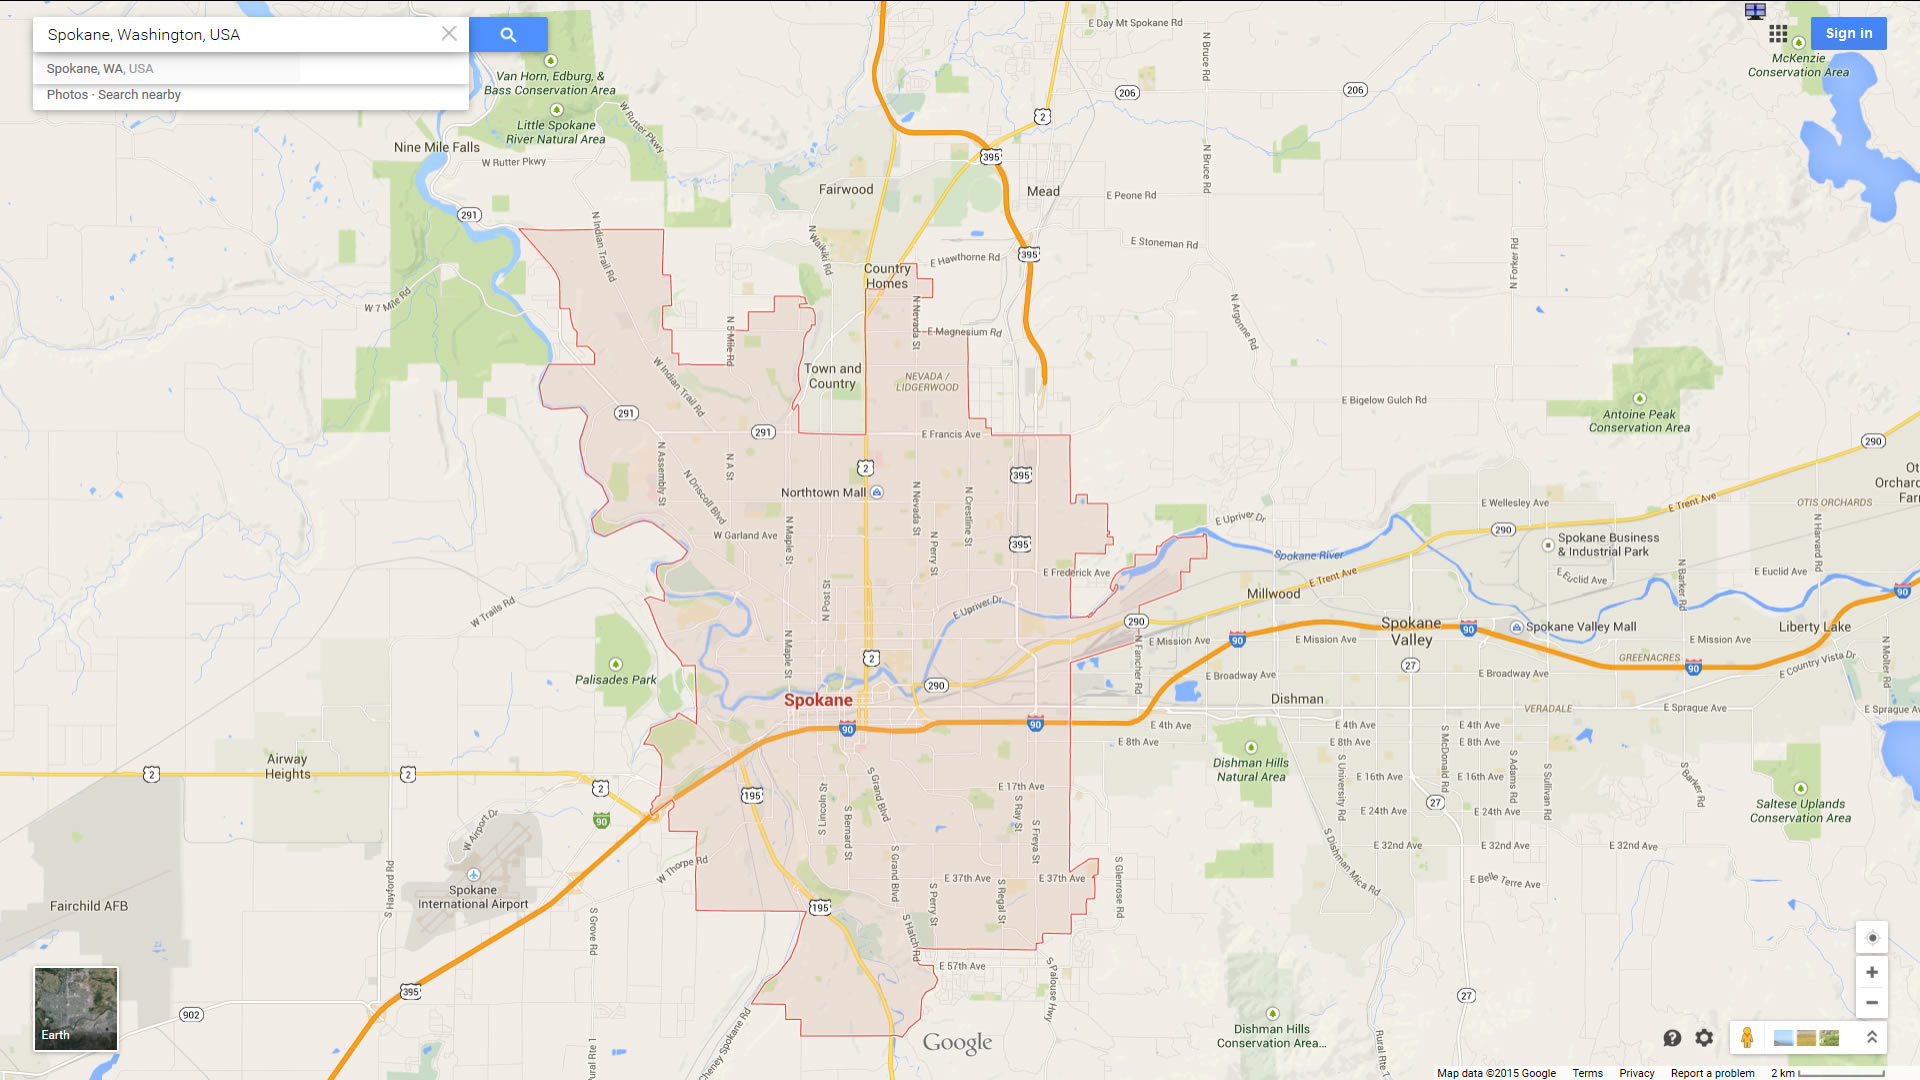 spokane map washington us